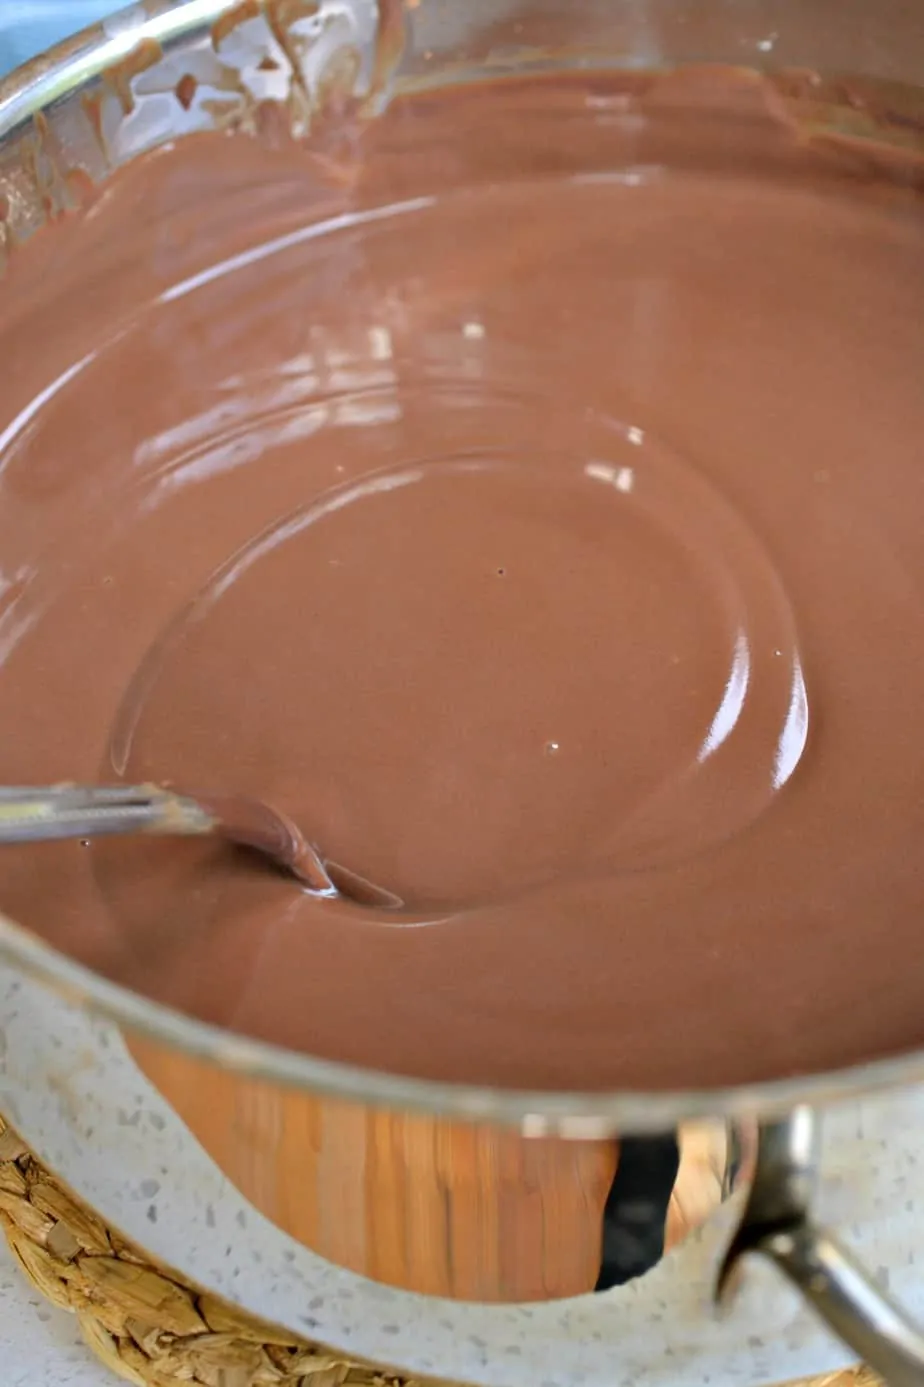 How to make Chocolate Pudding